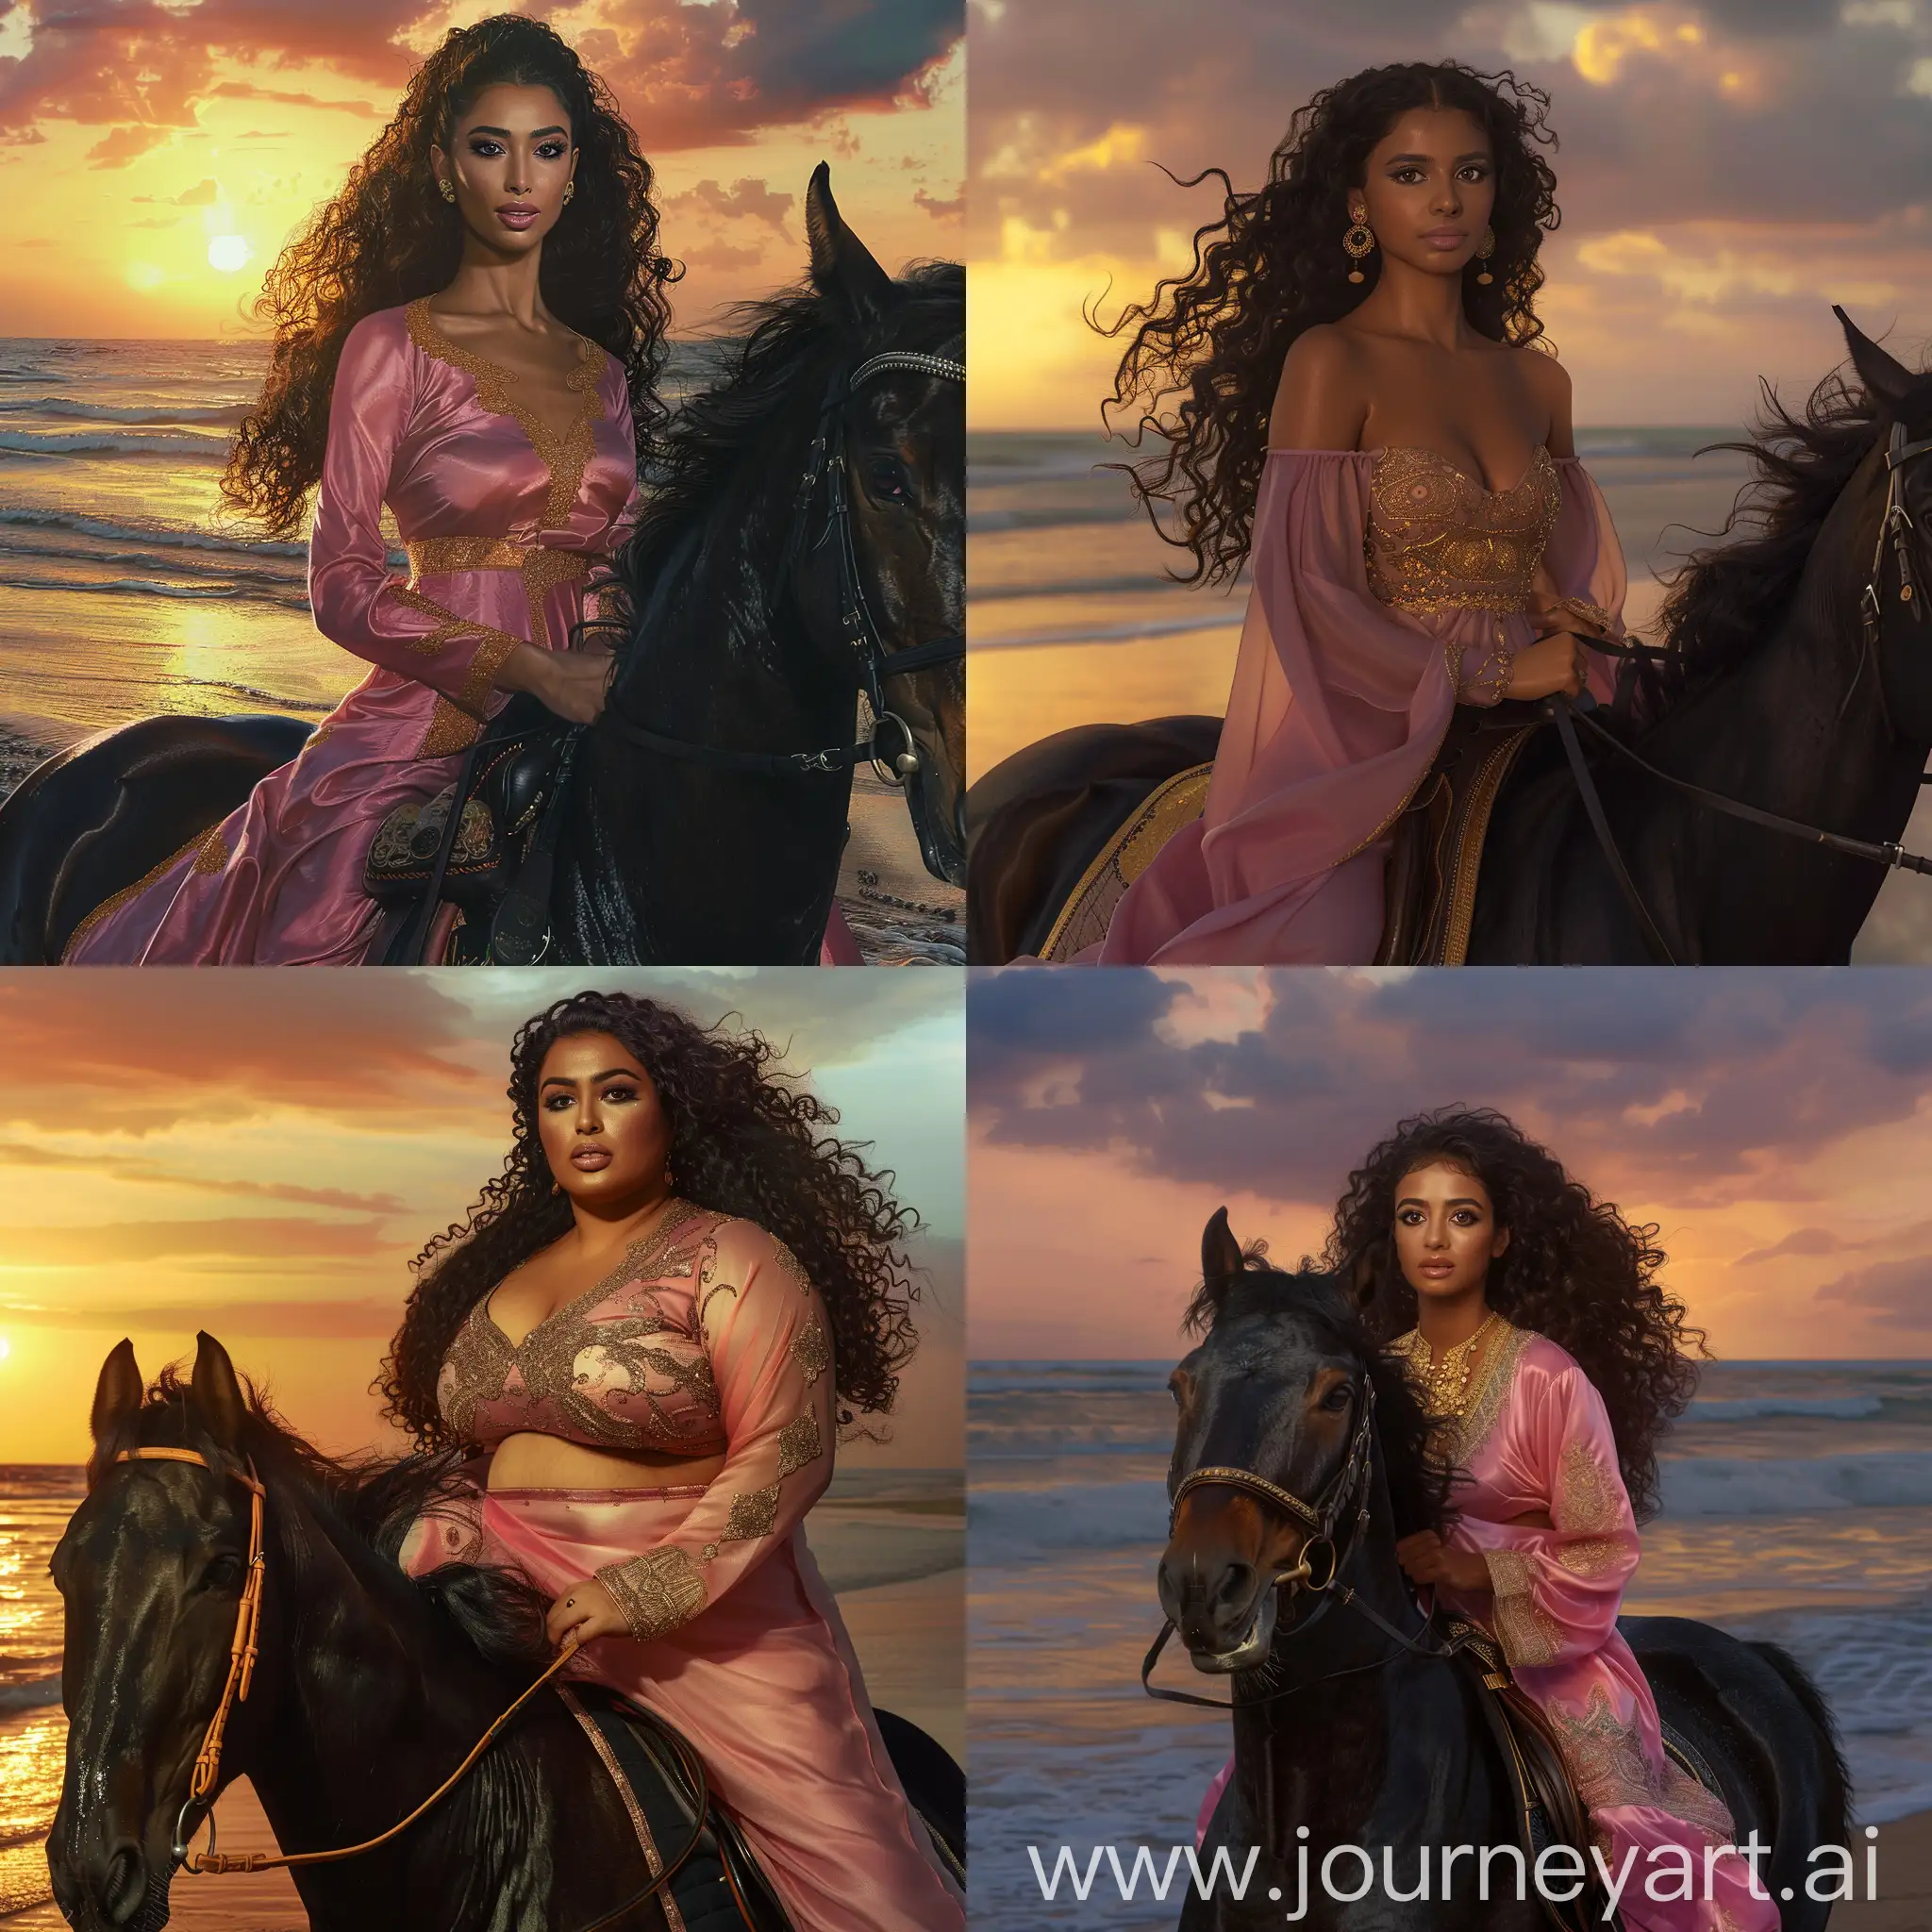 Kuwaiti-Equestrian-Beauty-Riding-a-Black-Arabian-Horse-at-Sunset